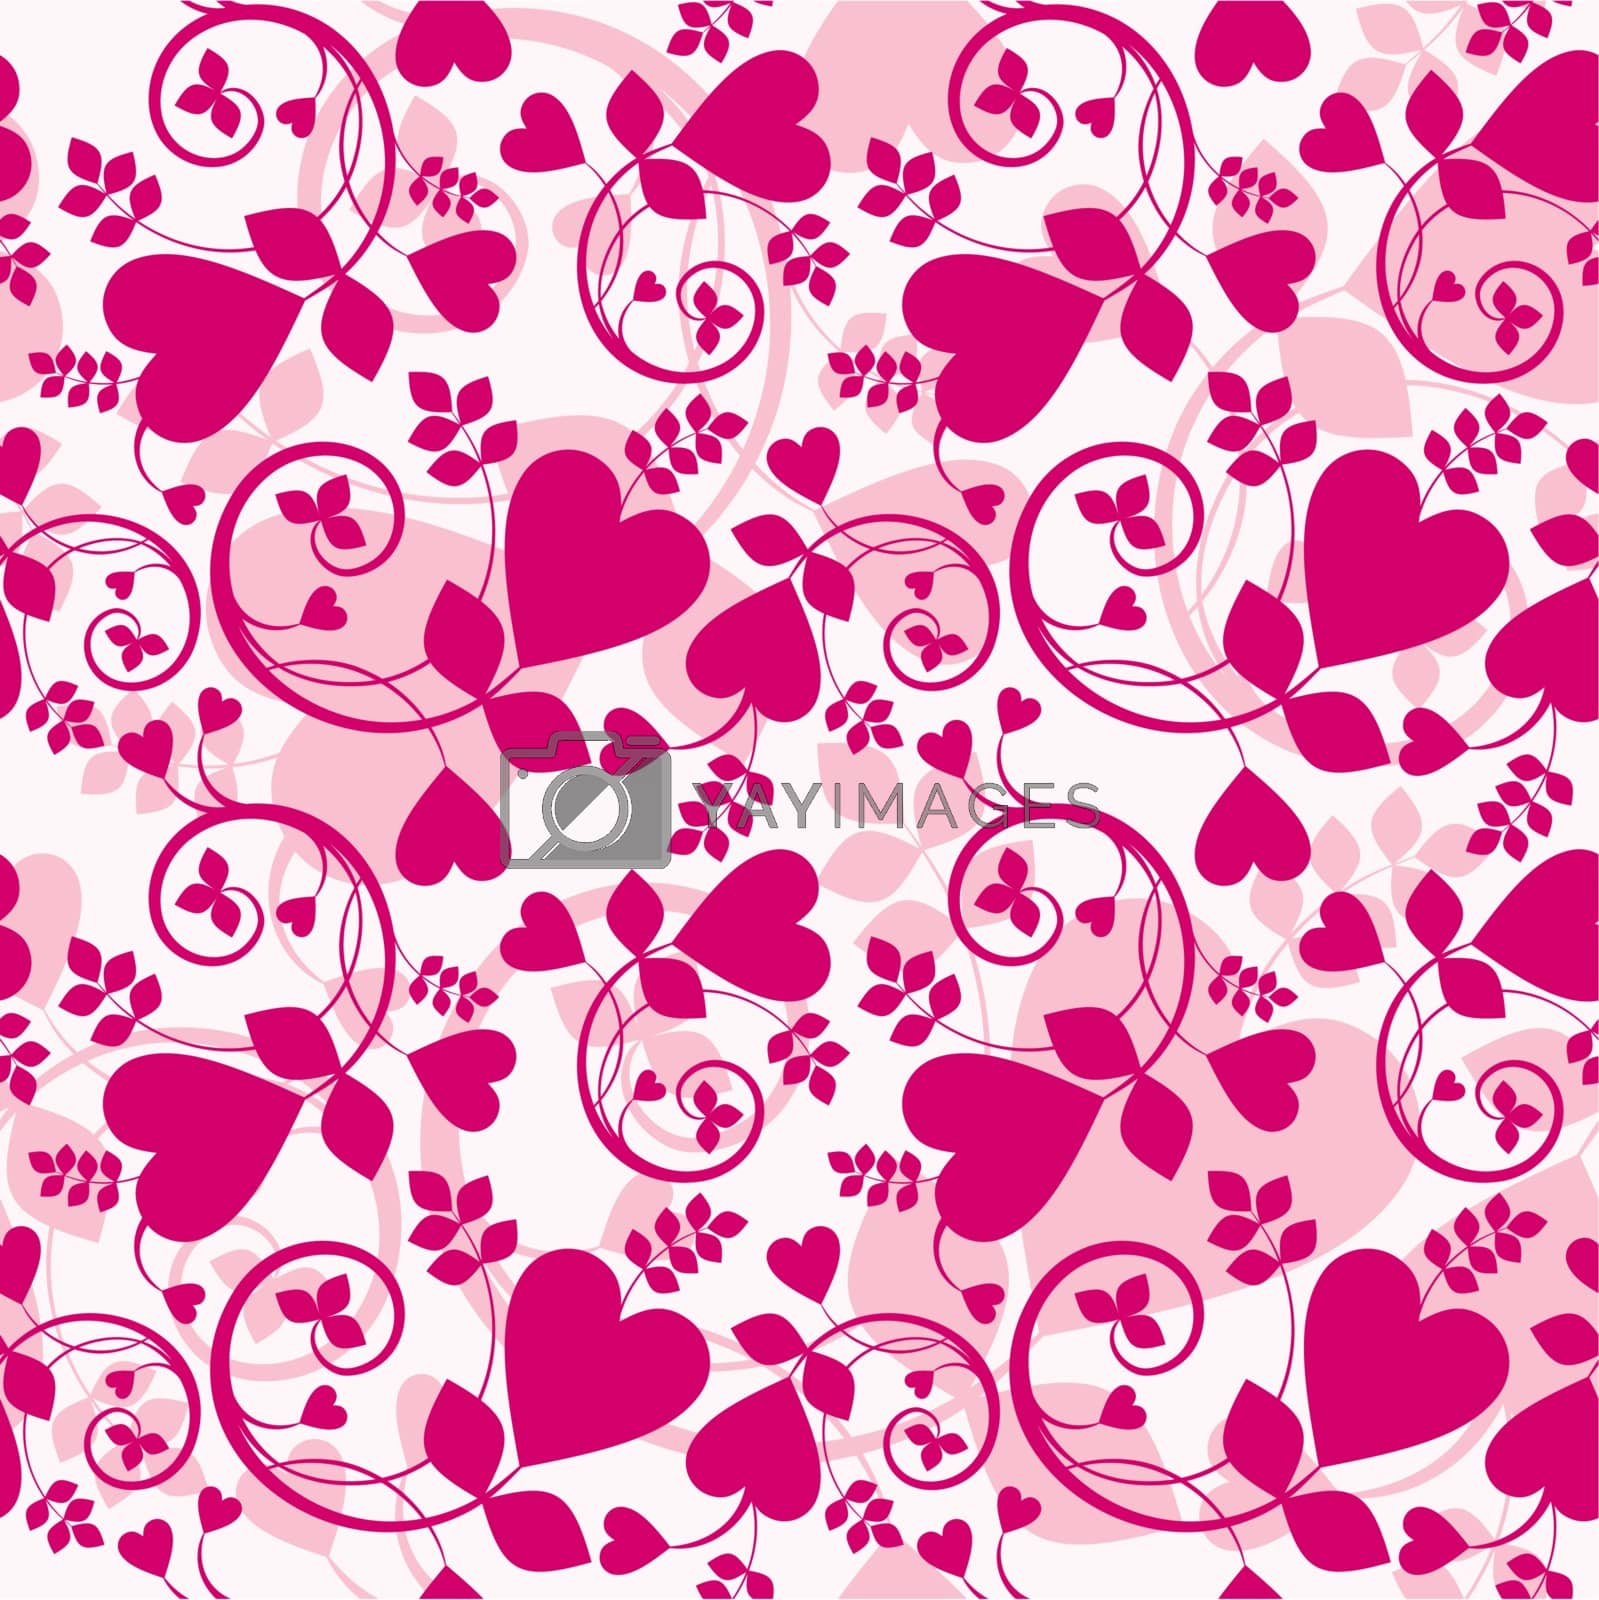 Royalty free image of heart wallpaper by SanyaL